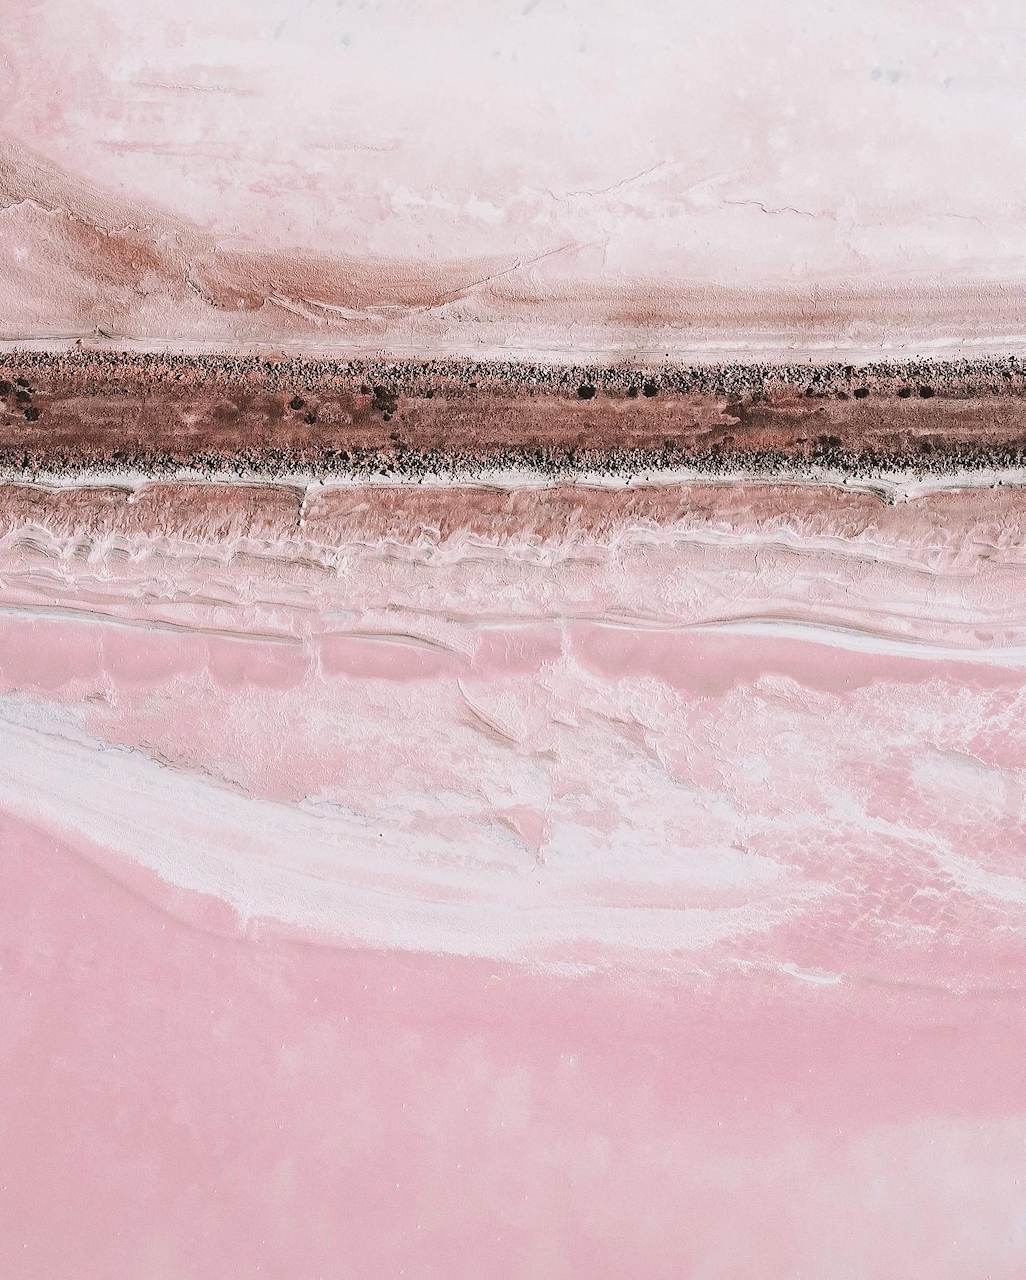 Drone View of Pink Lake - Bumbunga - South Australia (SA) - Australia